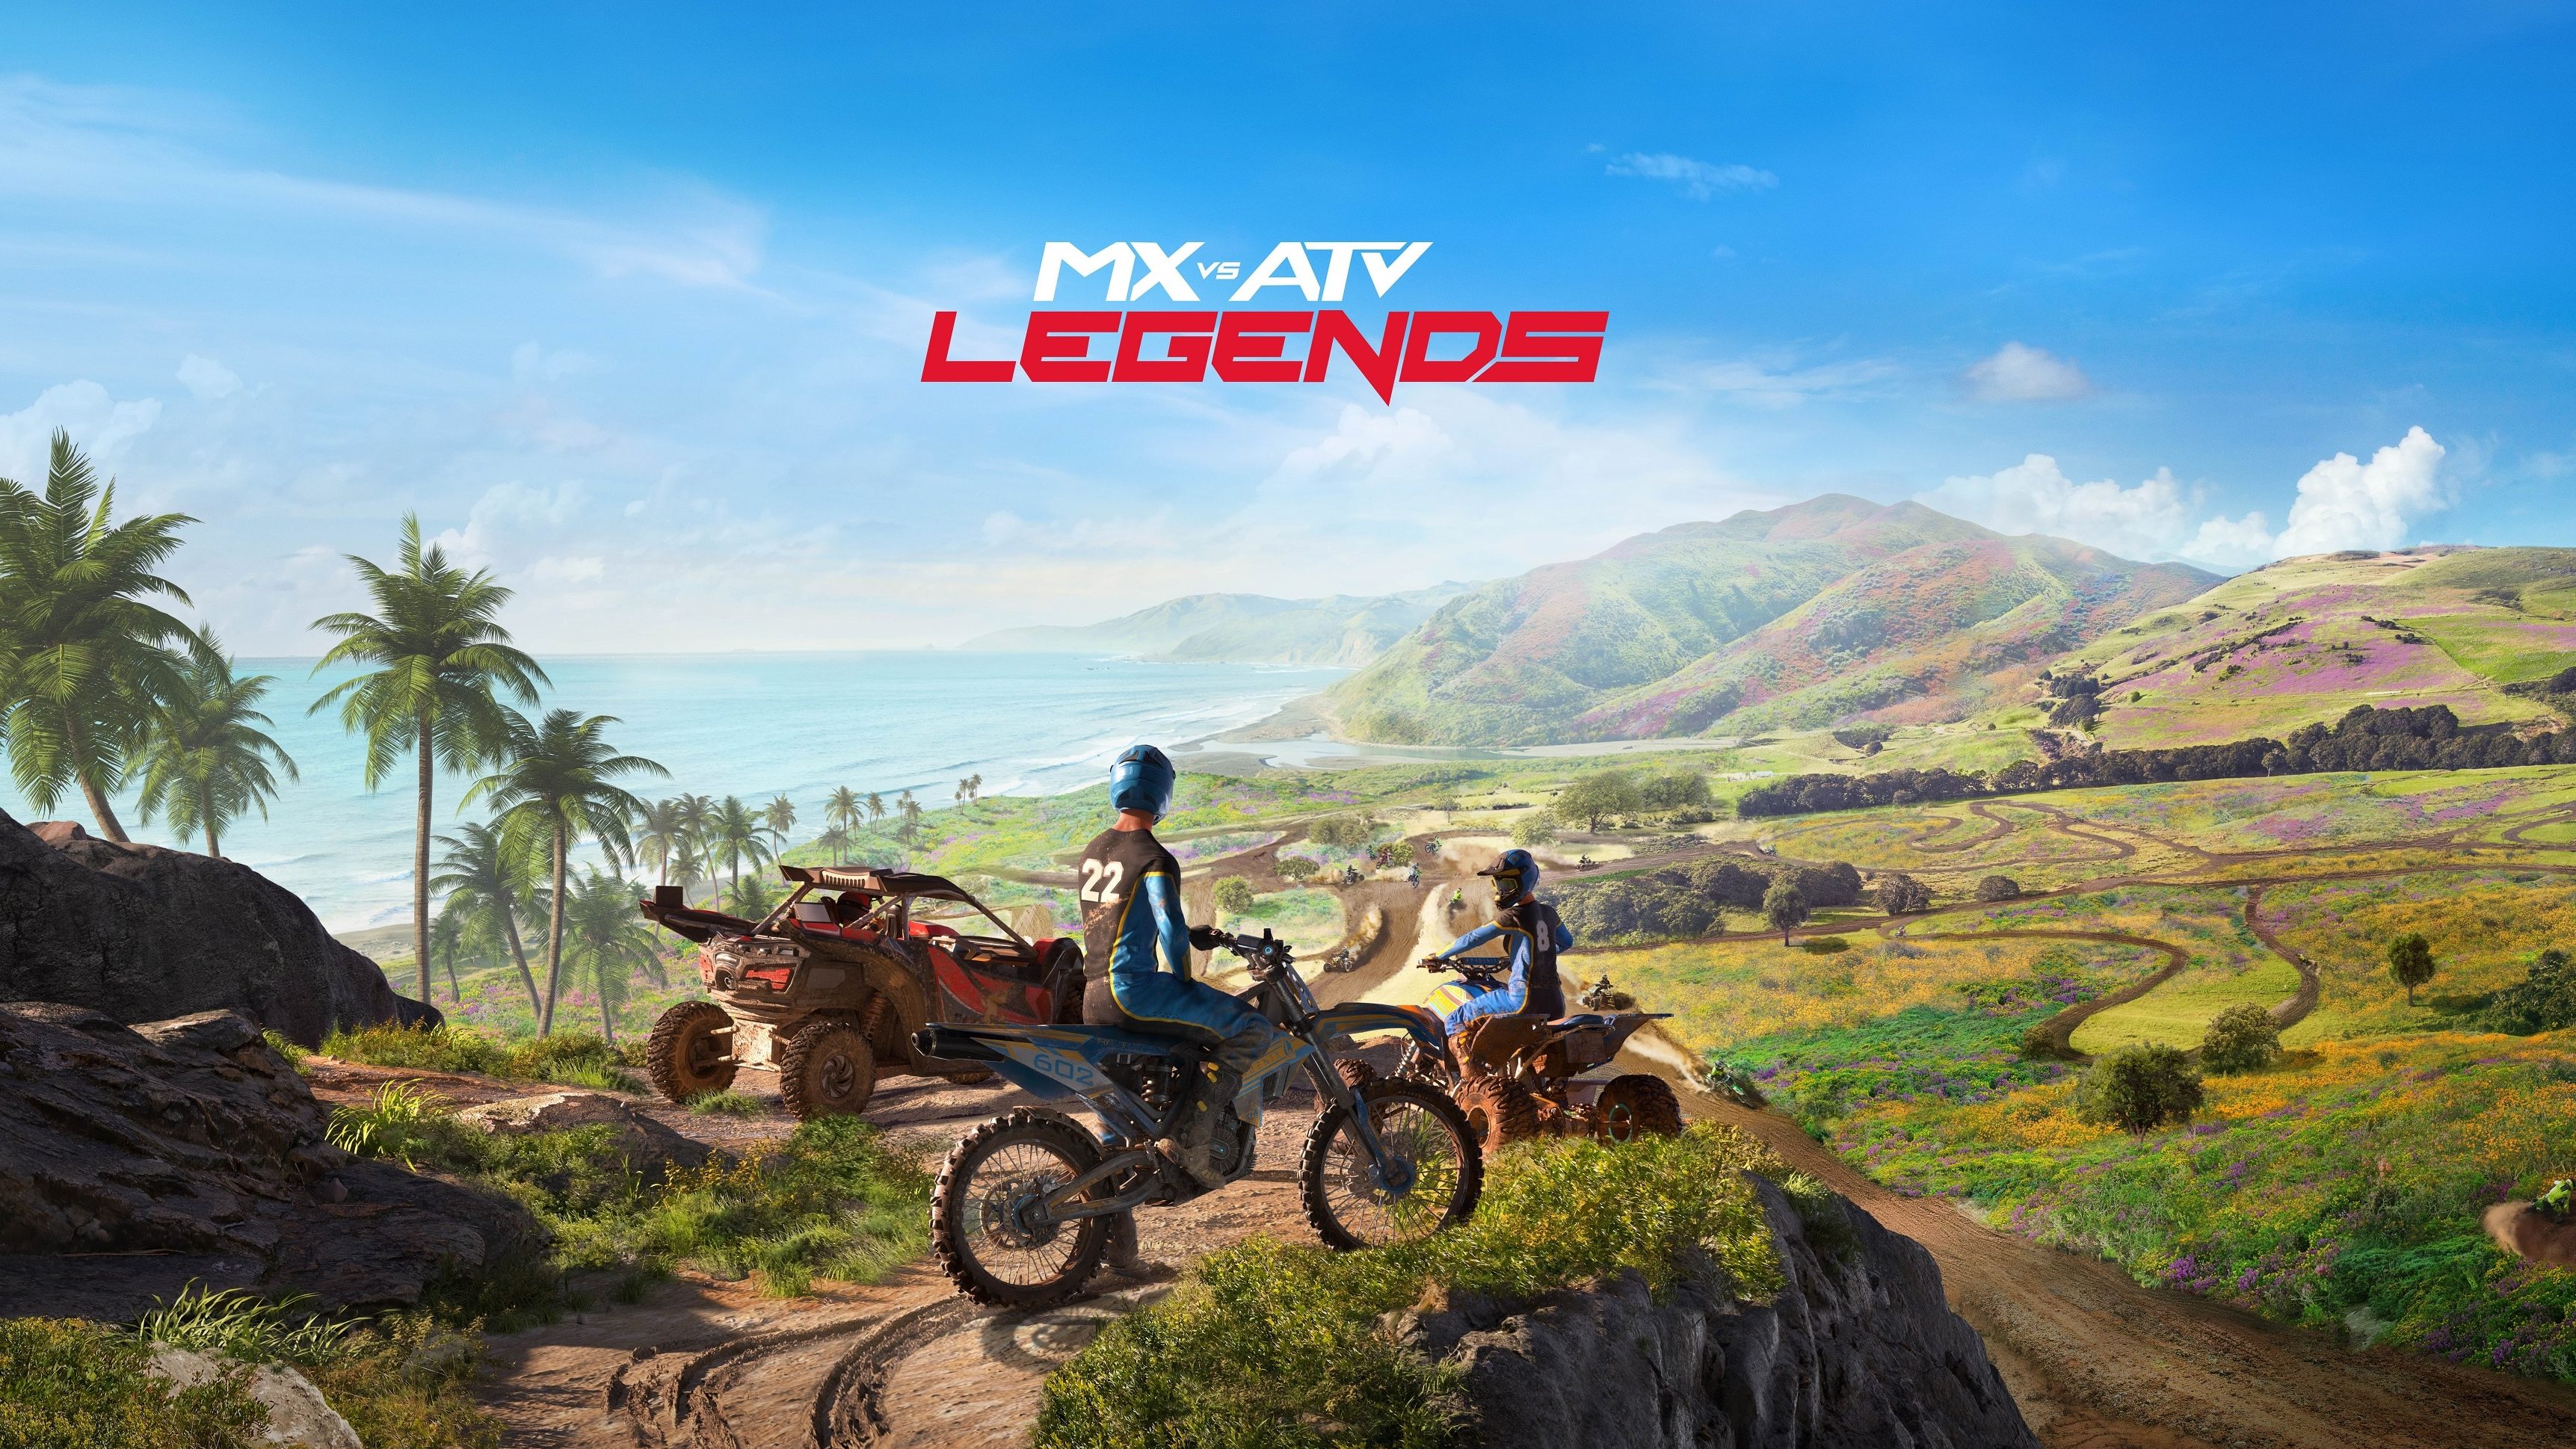 MX vs ATV Legends HD Wallpaper and Background